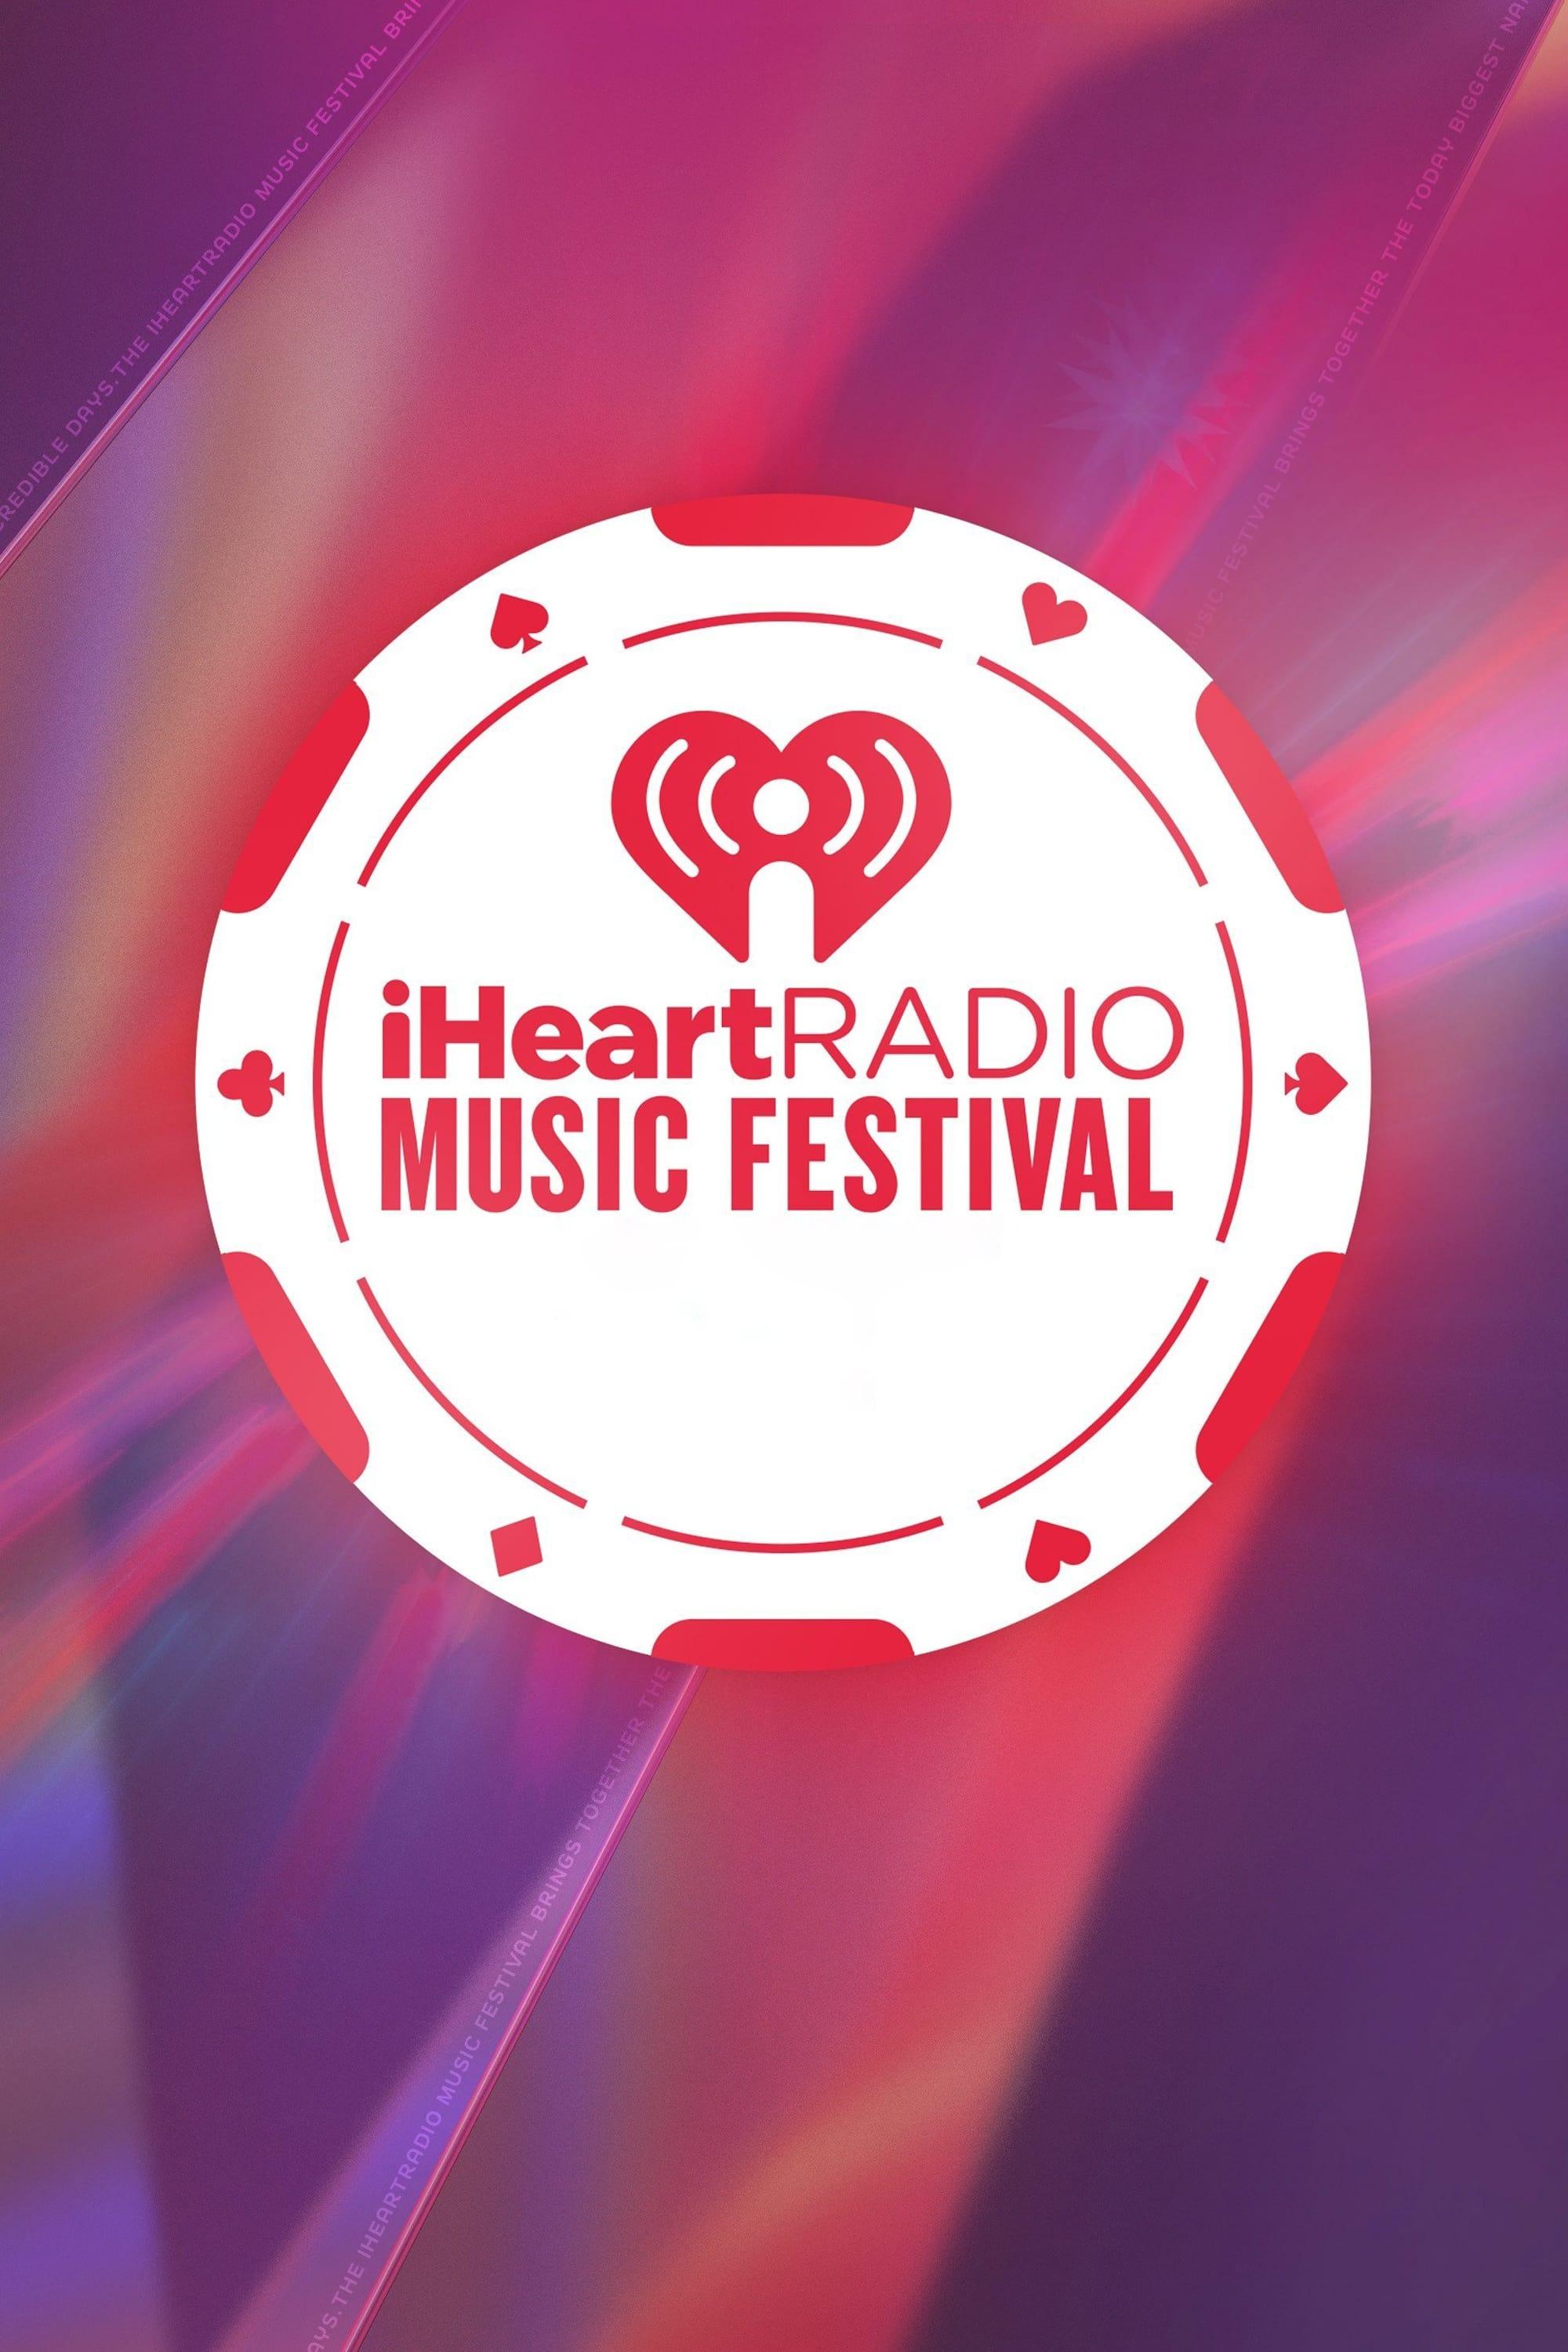 iHeartRadio Music Festival poster